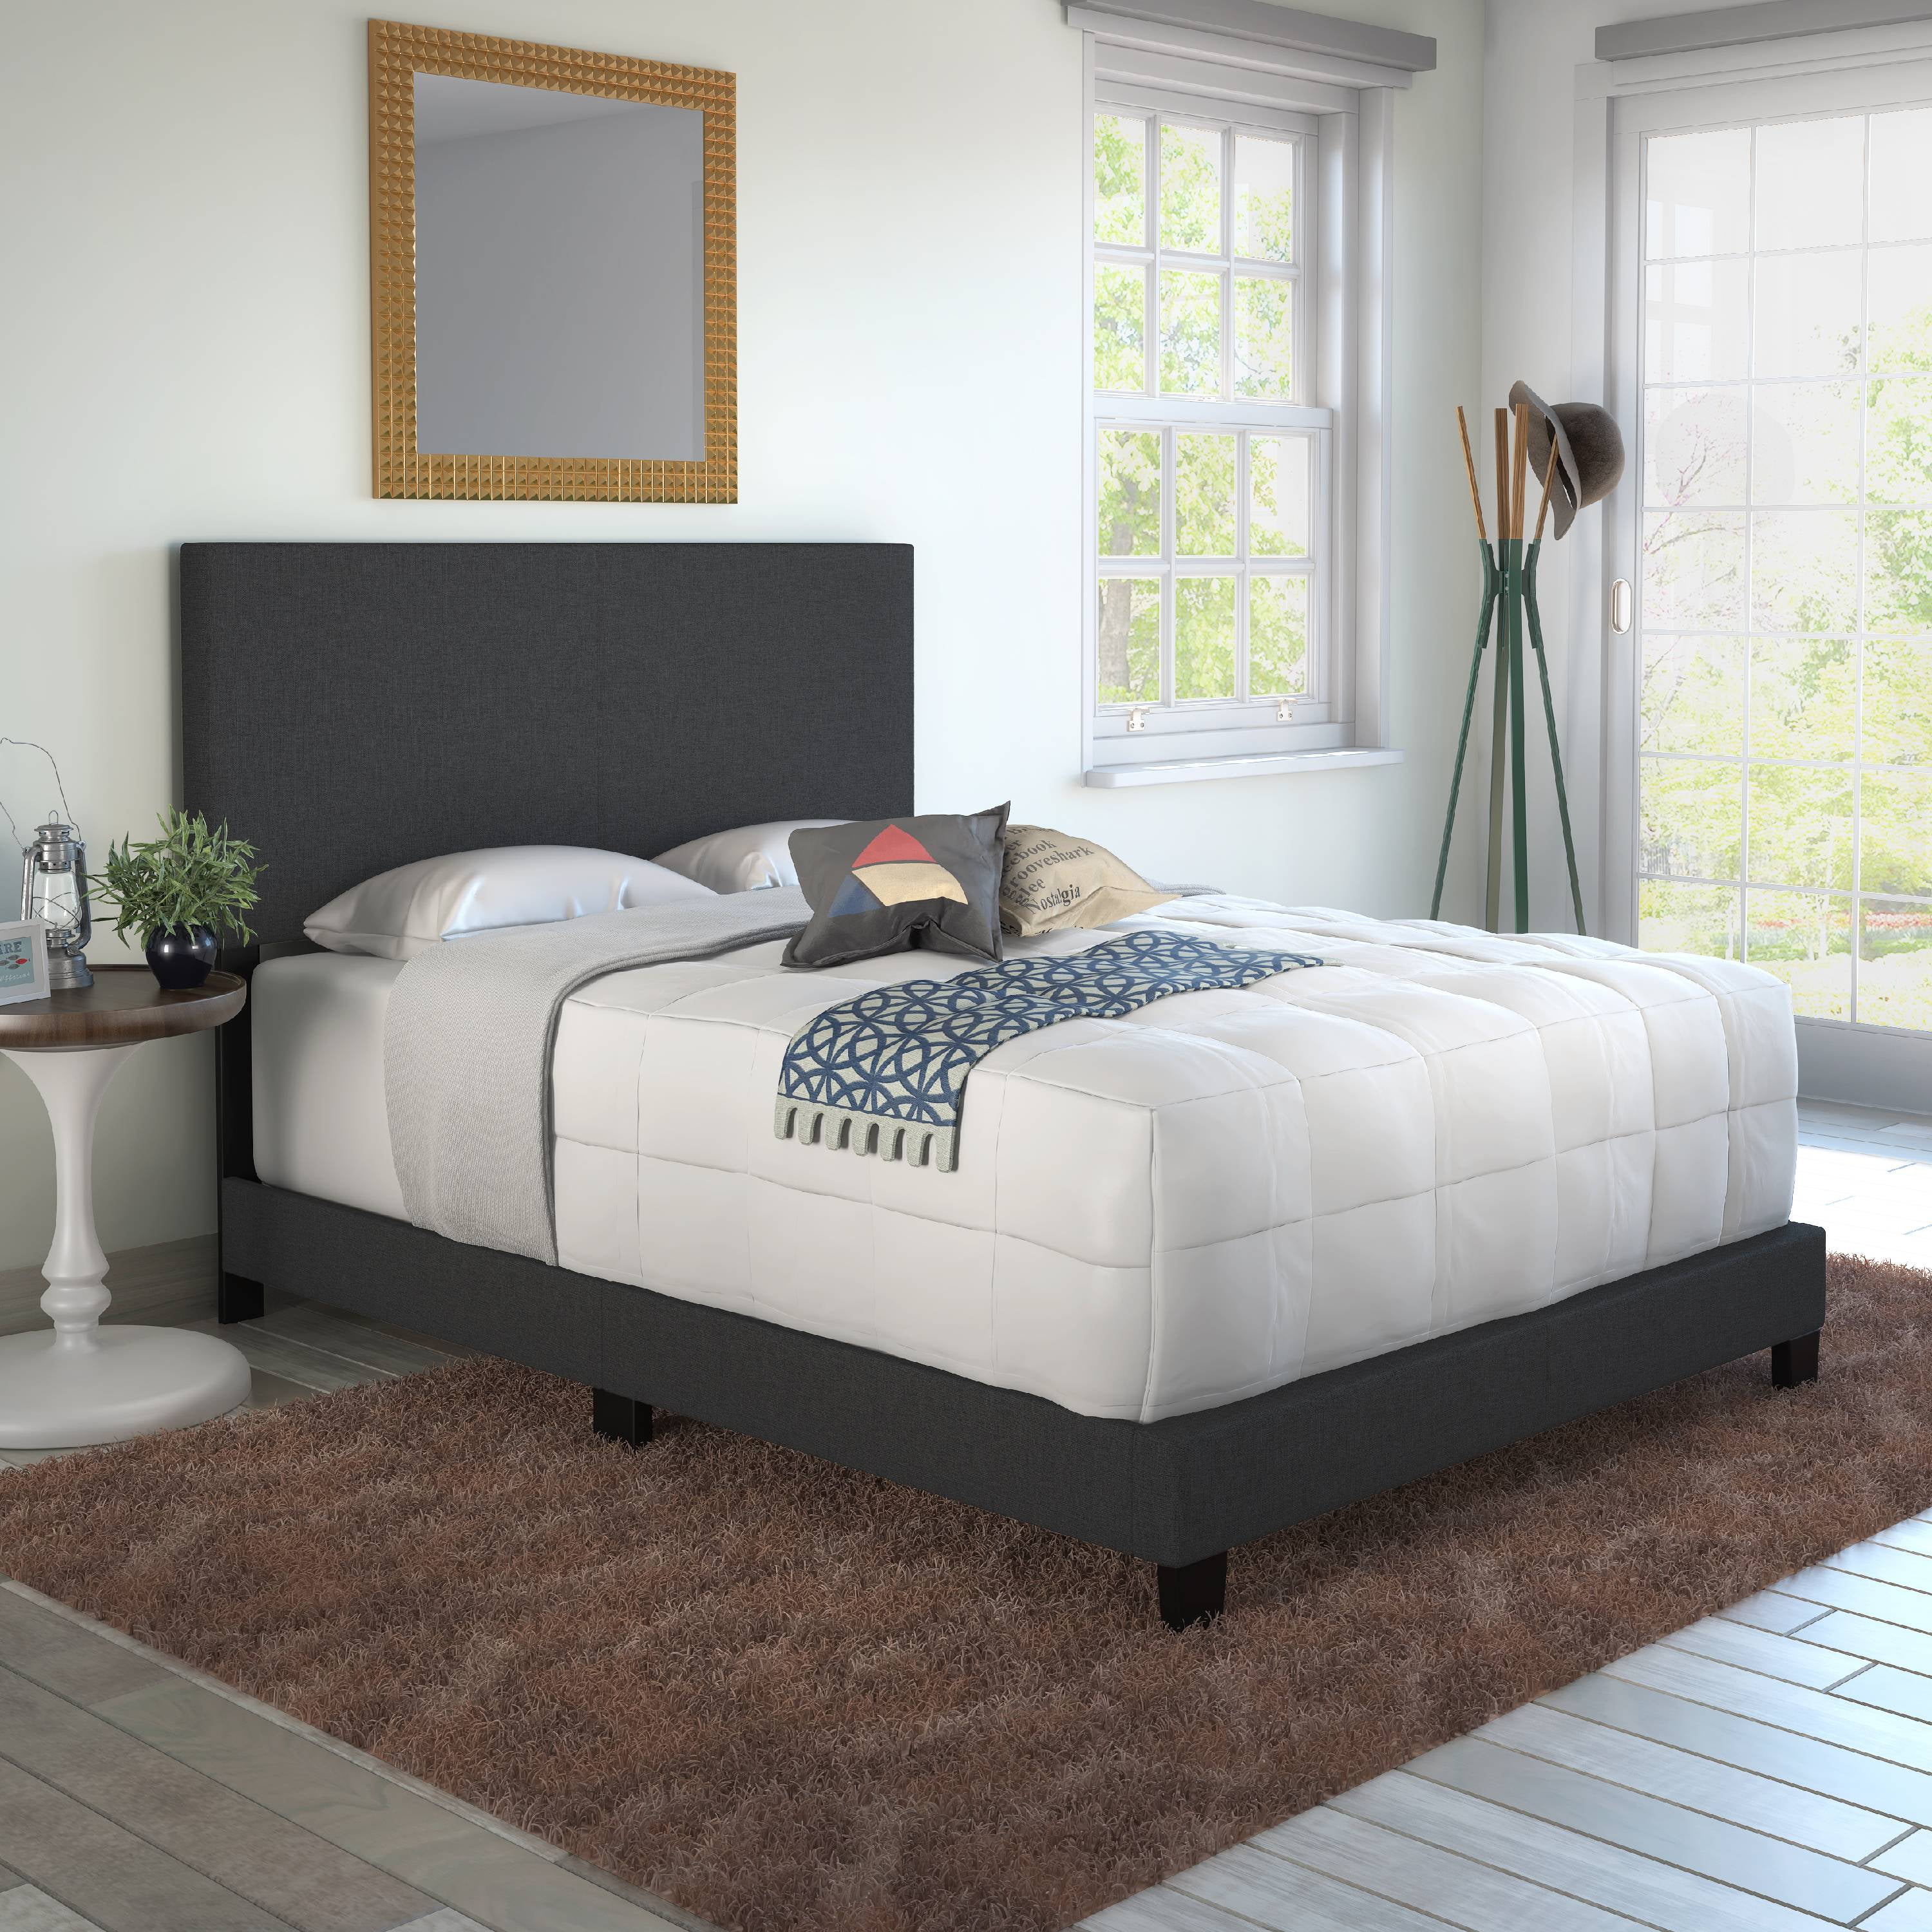 Boyd Sleep Milan Upholstered Linen Platform Bed, Full, Black - Walmart.com